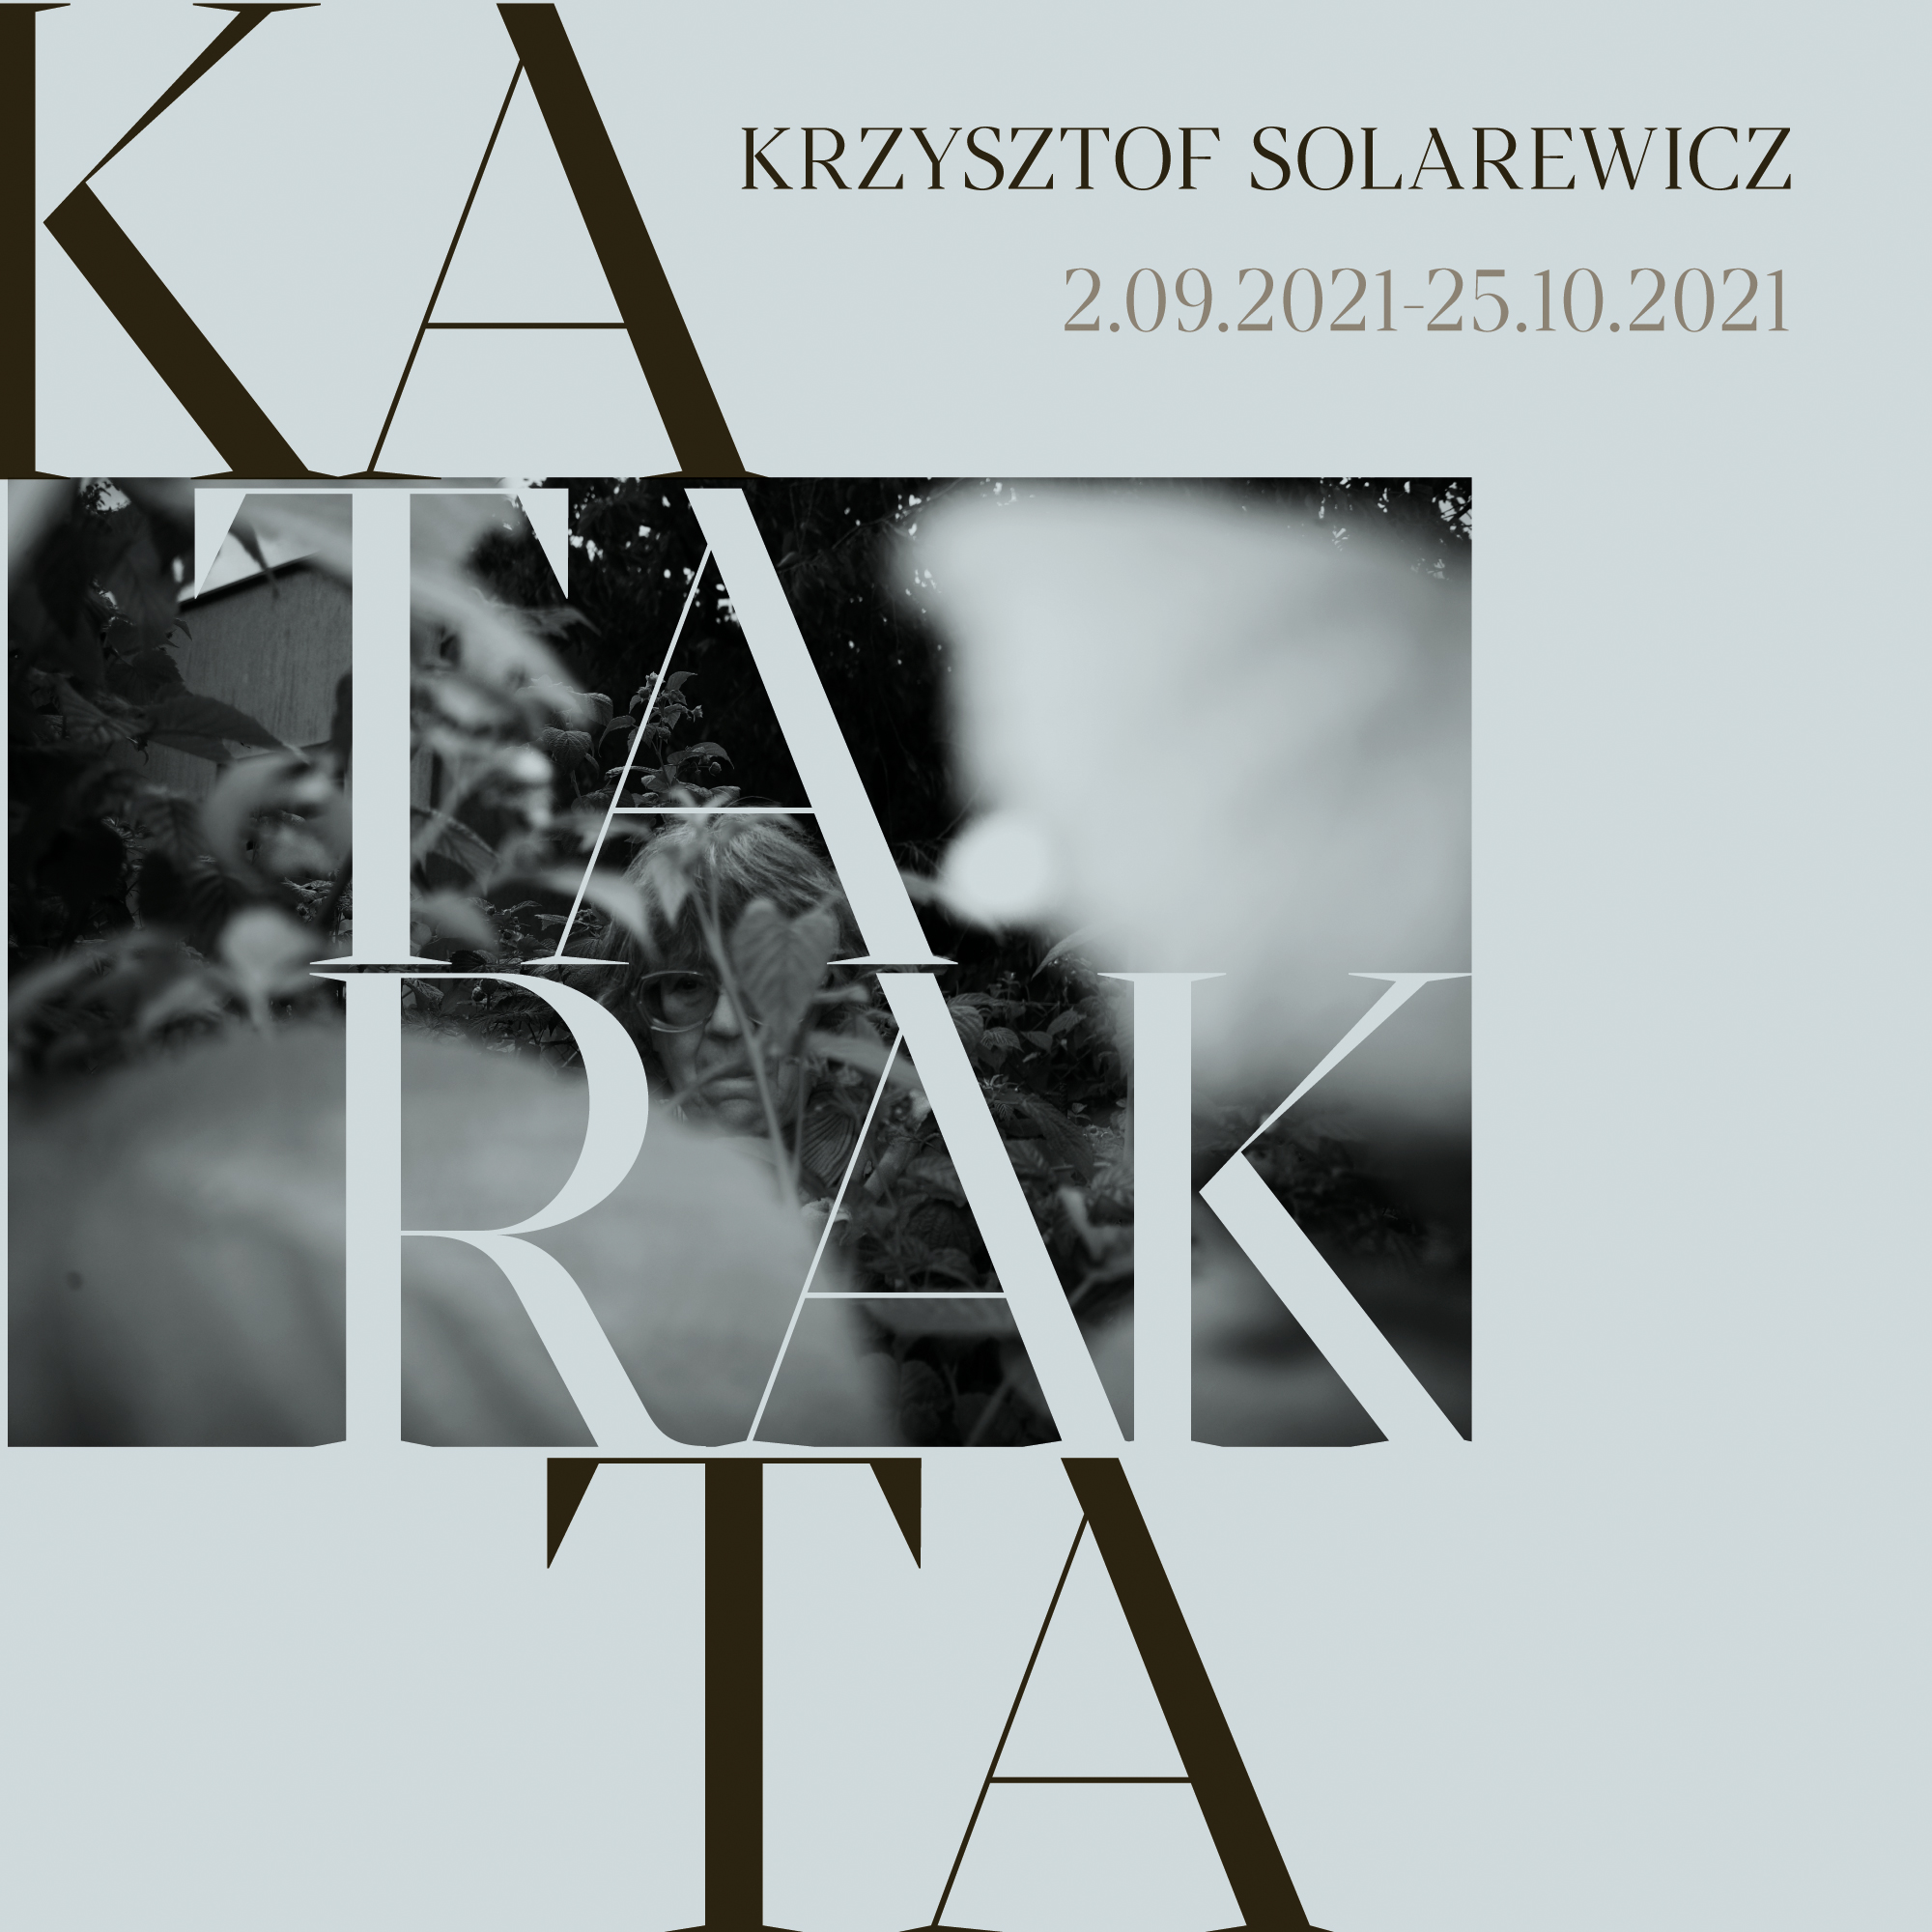 Krzysztof Solarewicz, Bez tytułu, z cyklu Katarakta, fotografia, sztuka polska, sztuka współczesna, Niezła Sztuka